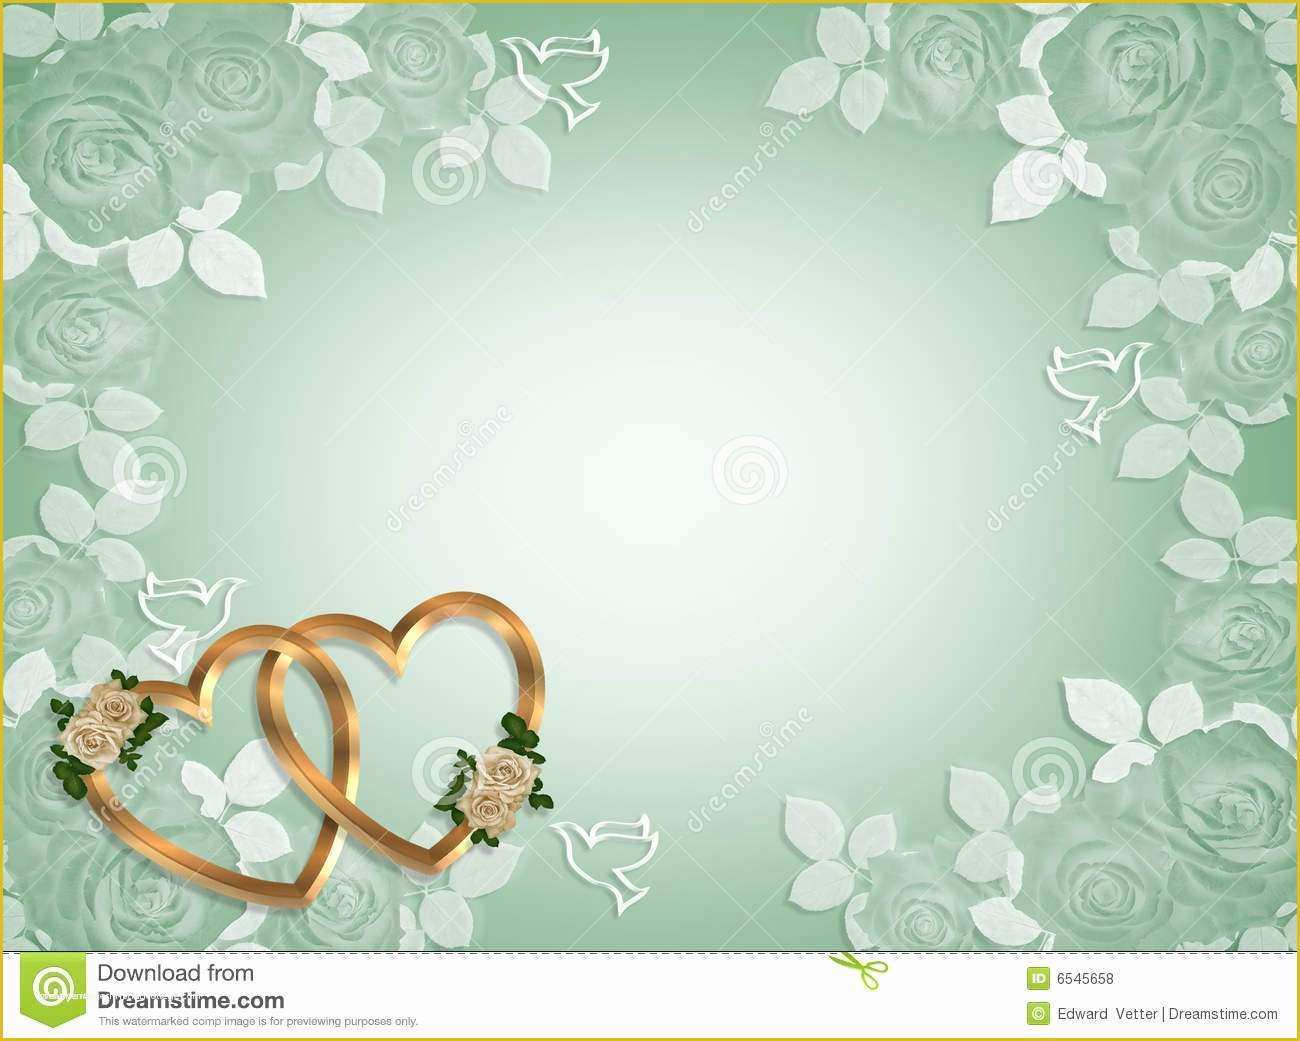 Wedding Invitation Templates Free Download Of Wedding Invitation Background Designs Free Luxury